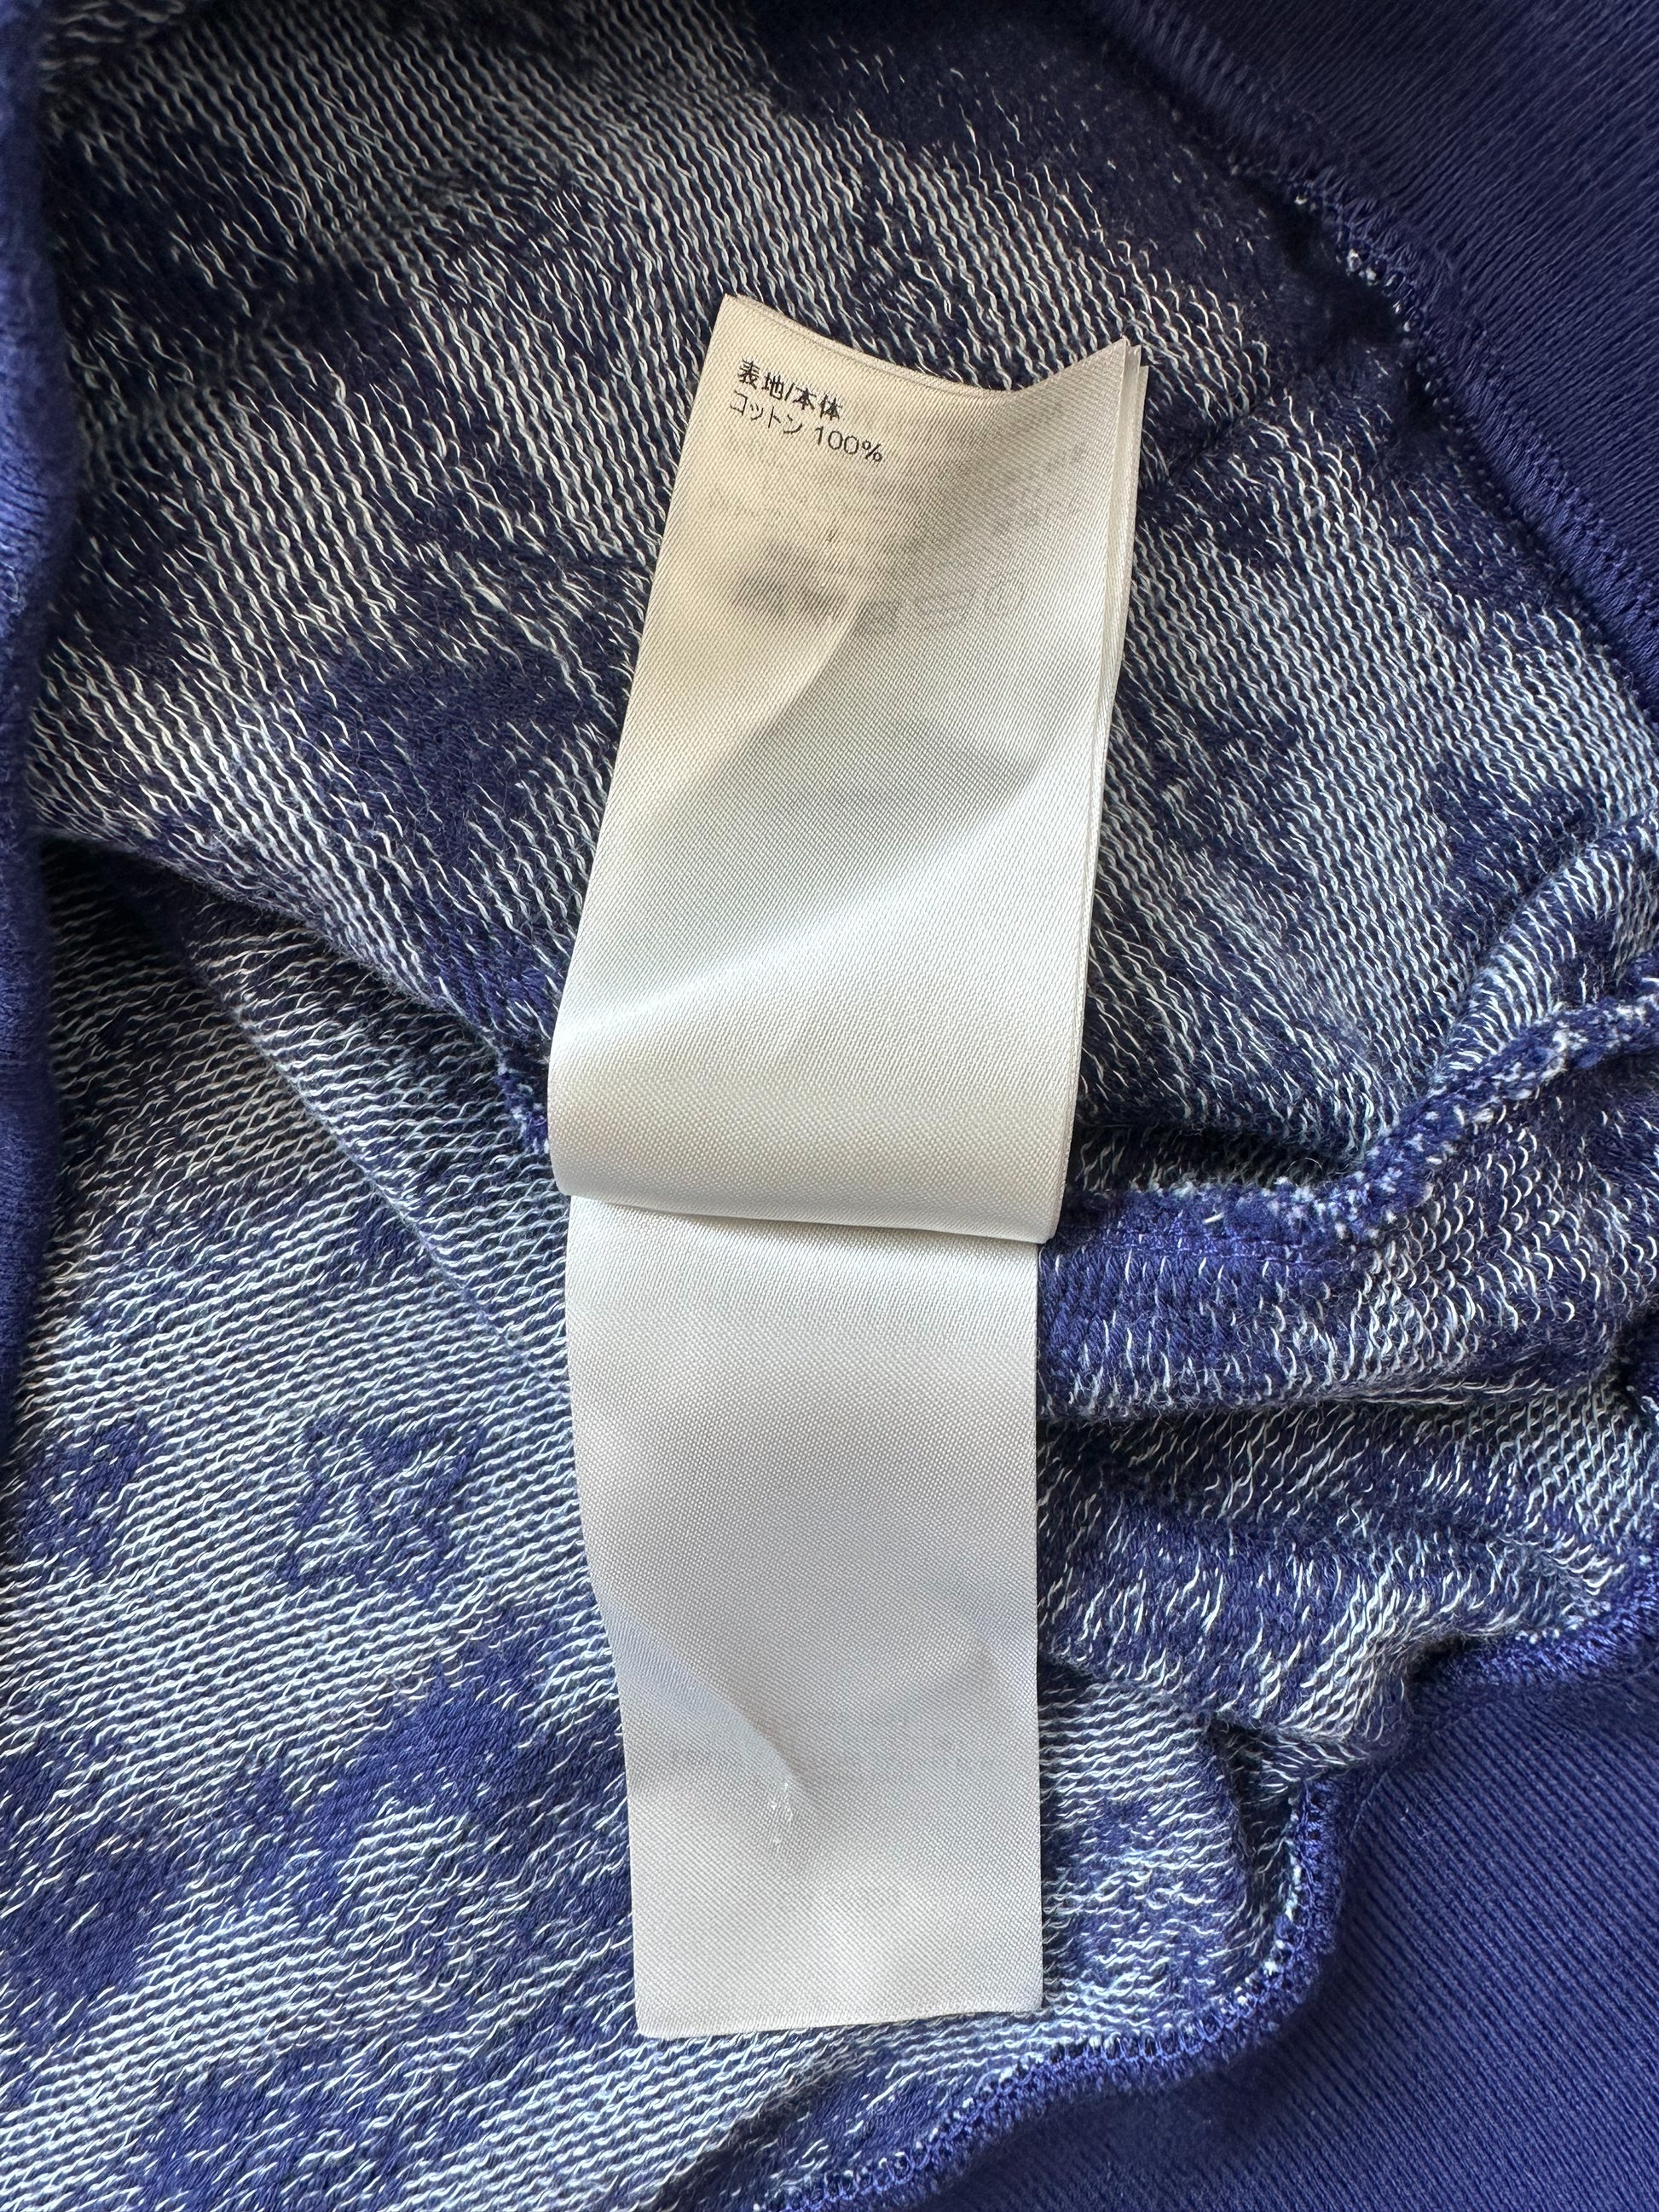 Louis Vuitton Bandana Short-Sleeve Hoodie